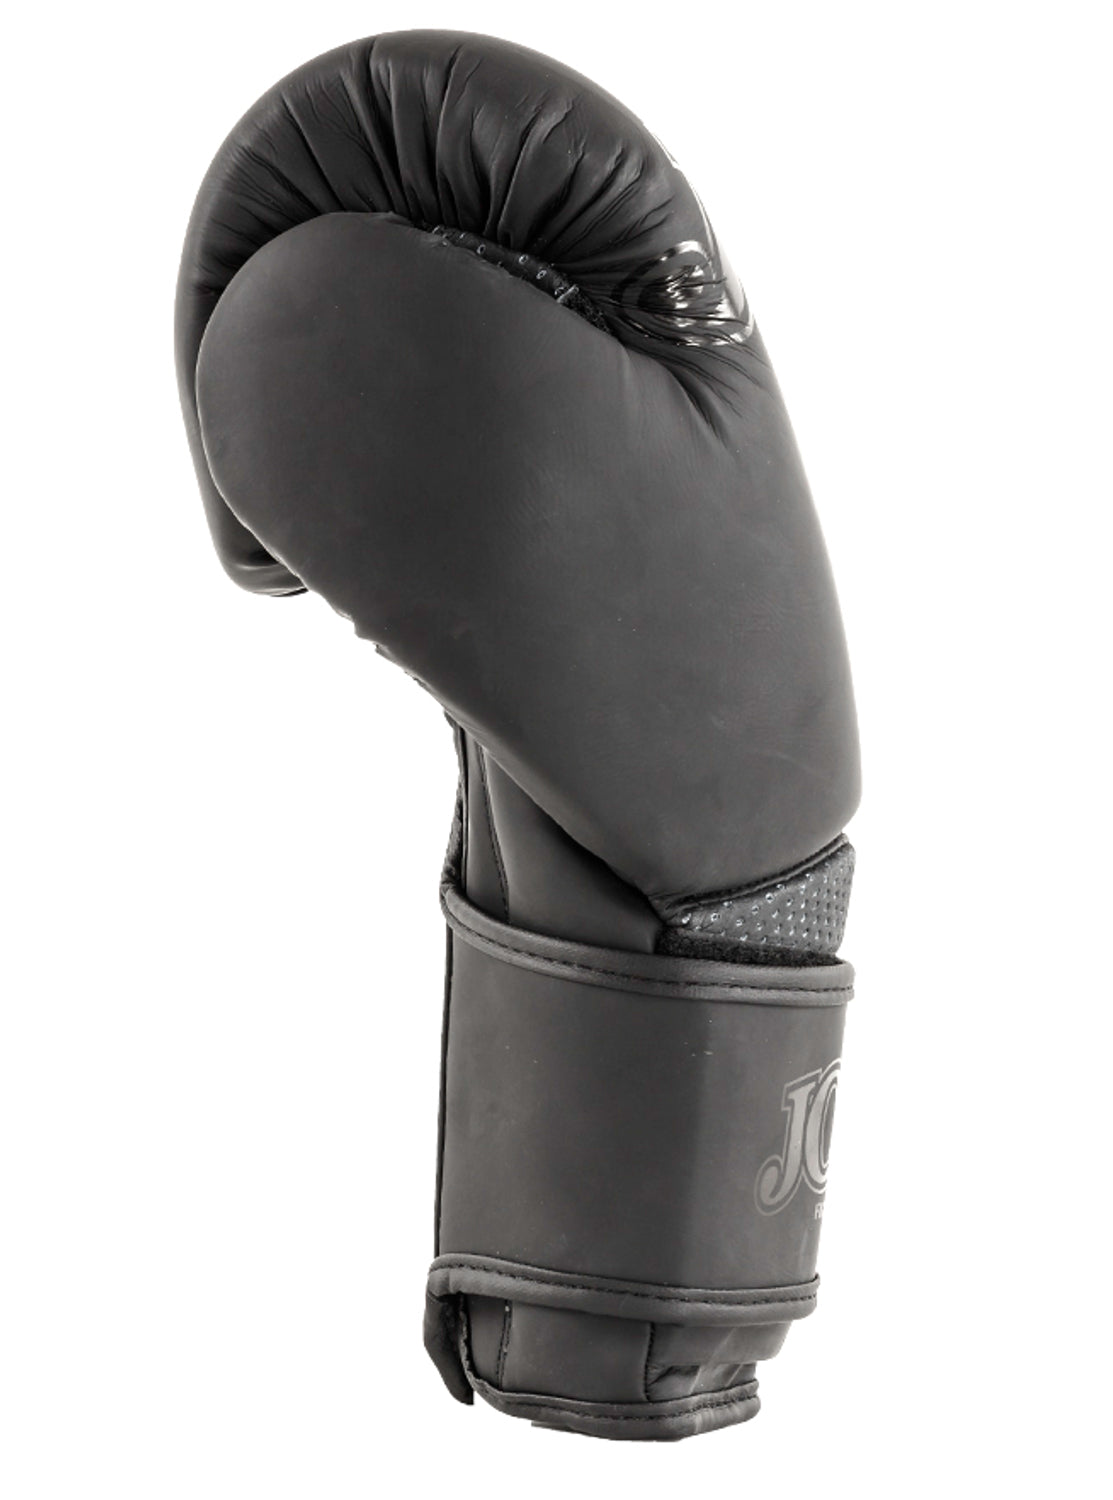 Joya Black Metal Kick Boxing Gloves | Synthetic Leather